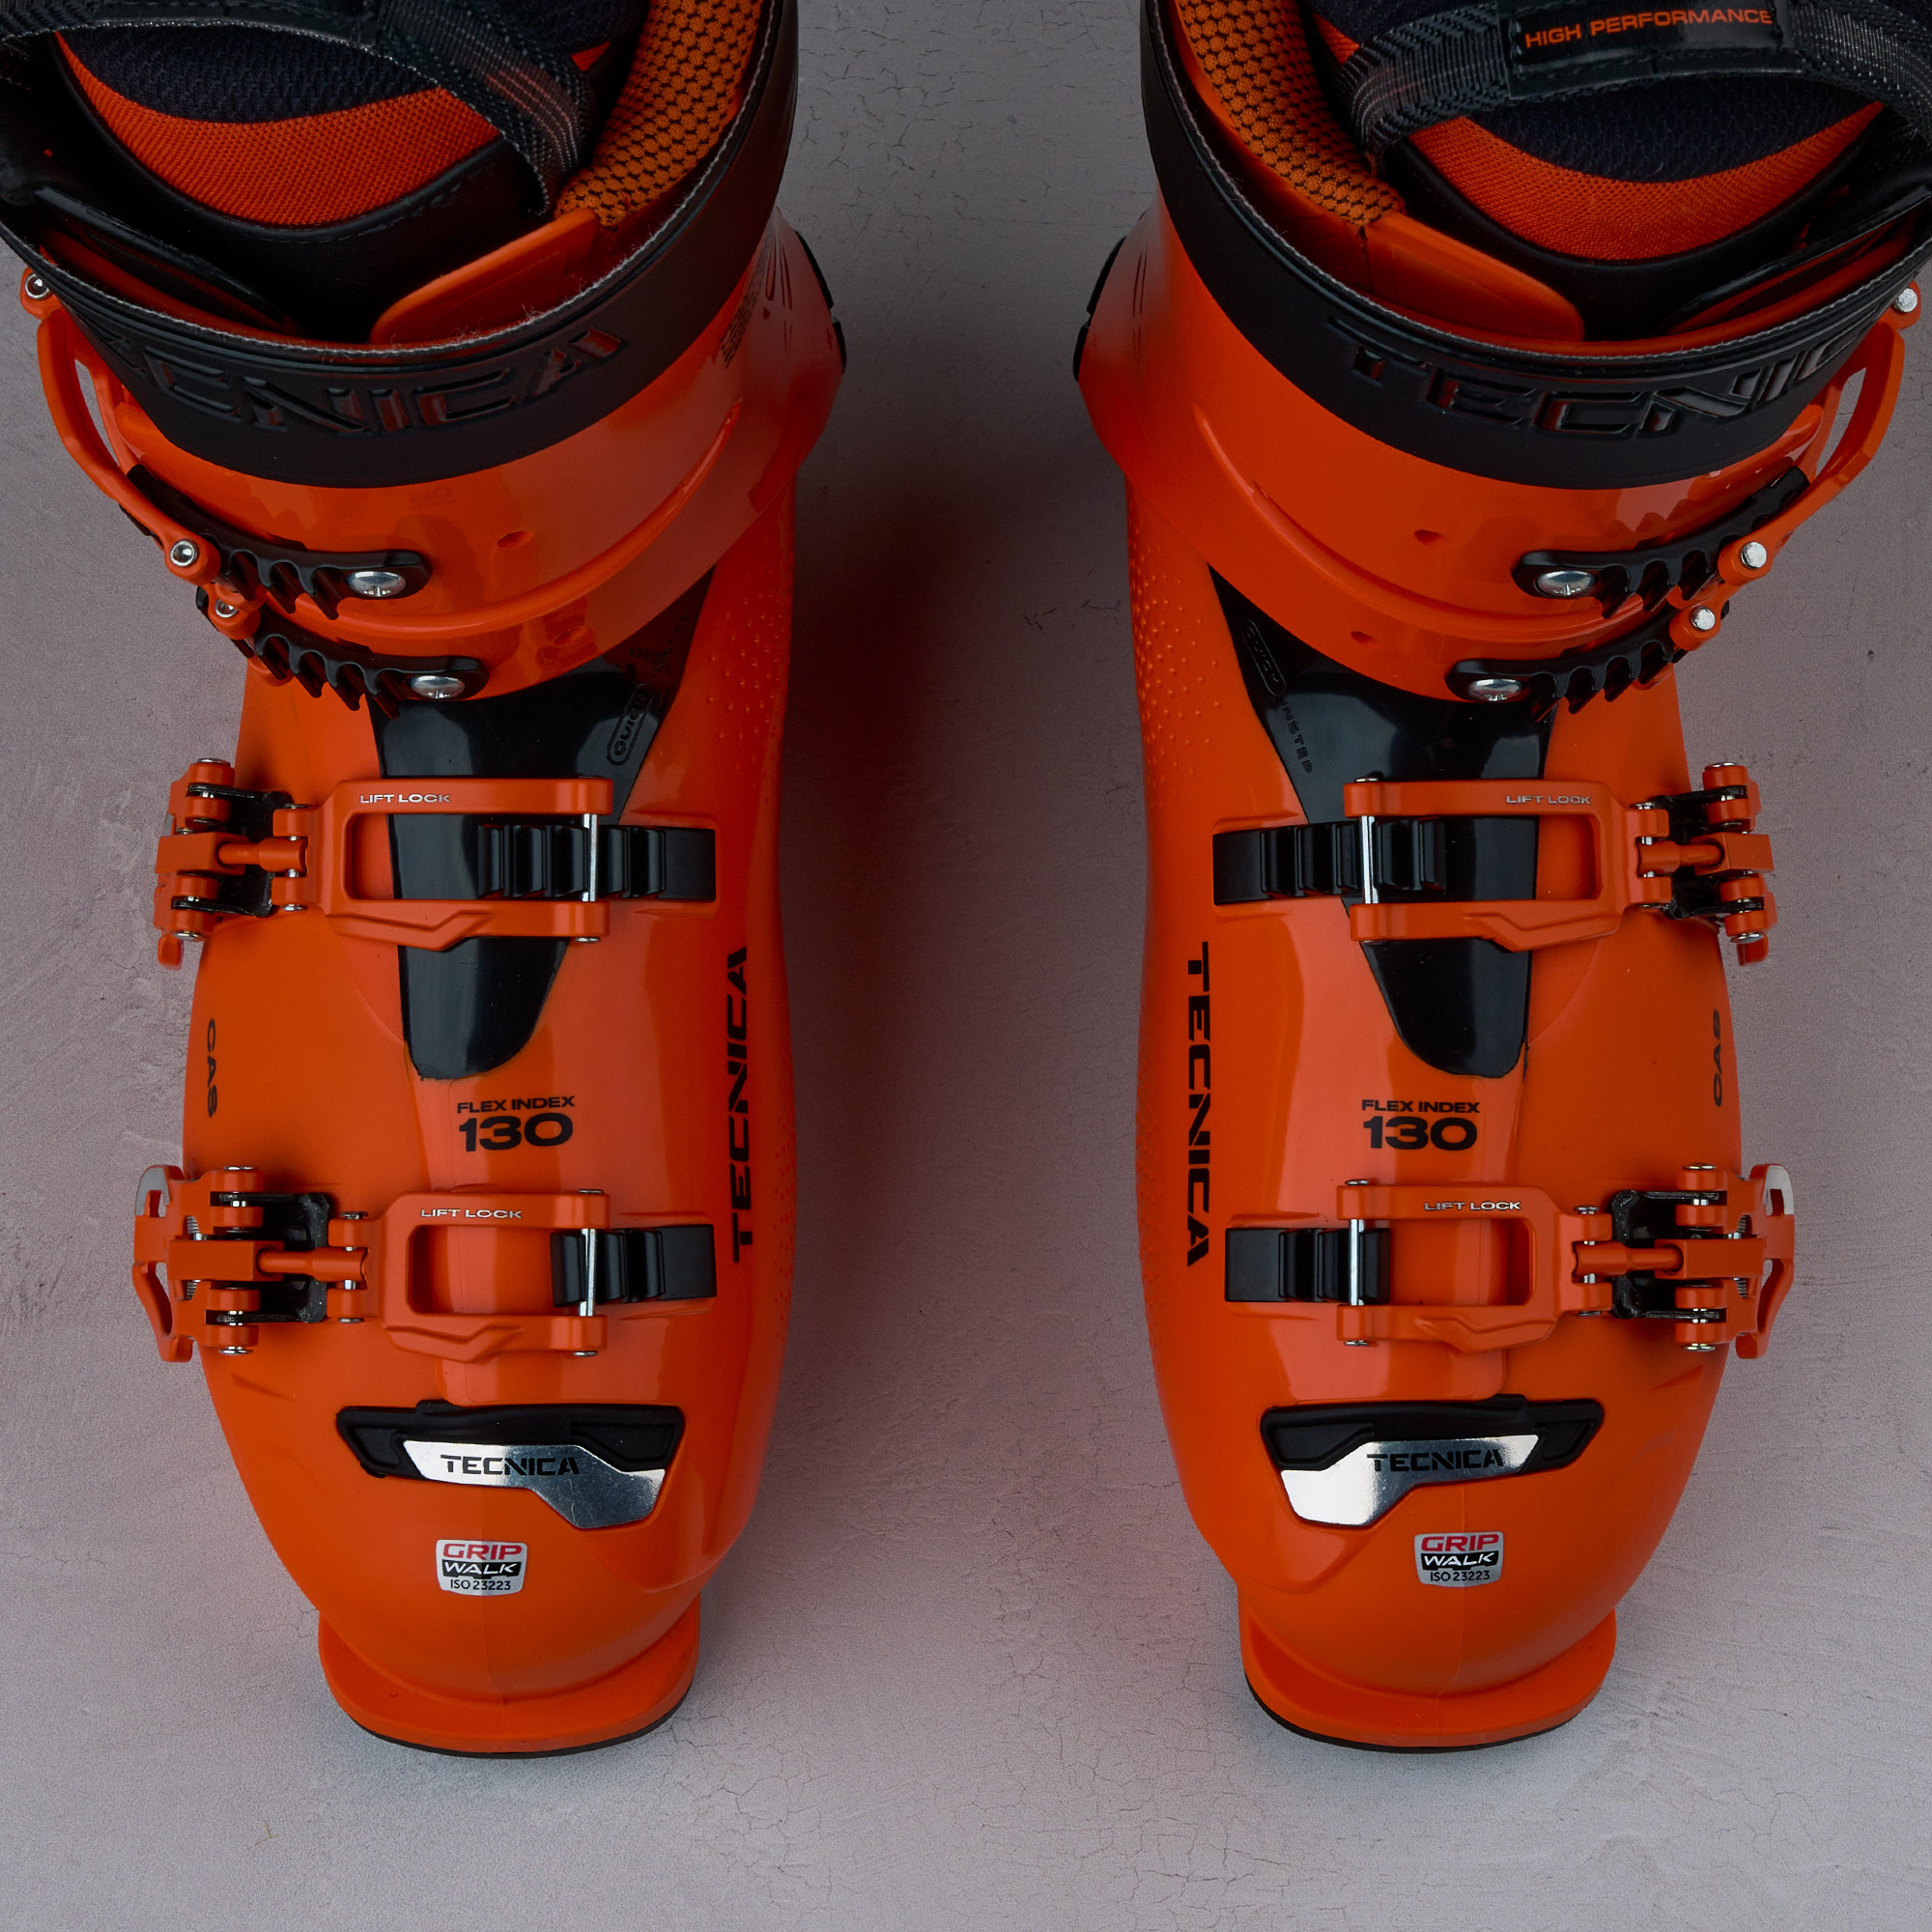 Tecnica Mach1 HV 130 Ski Boots · 2024